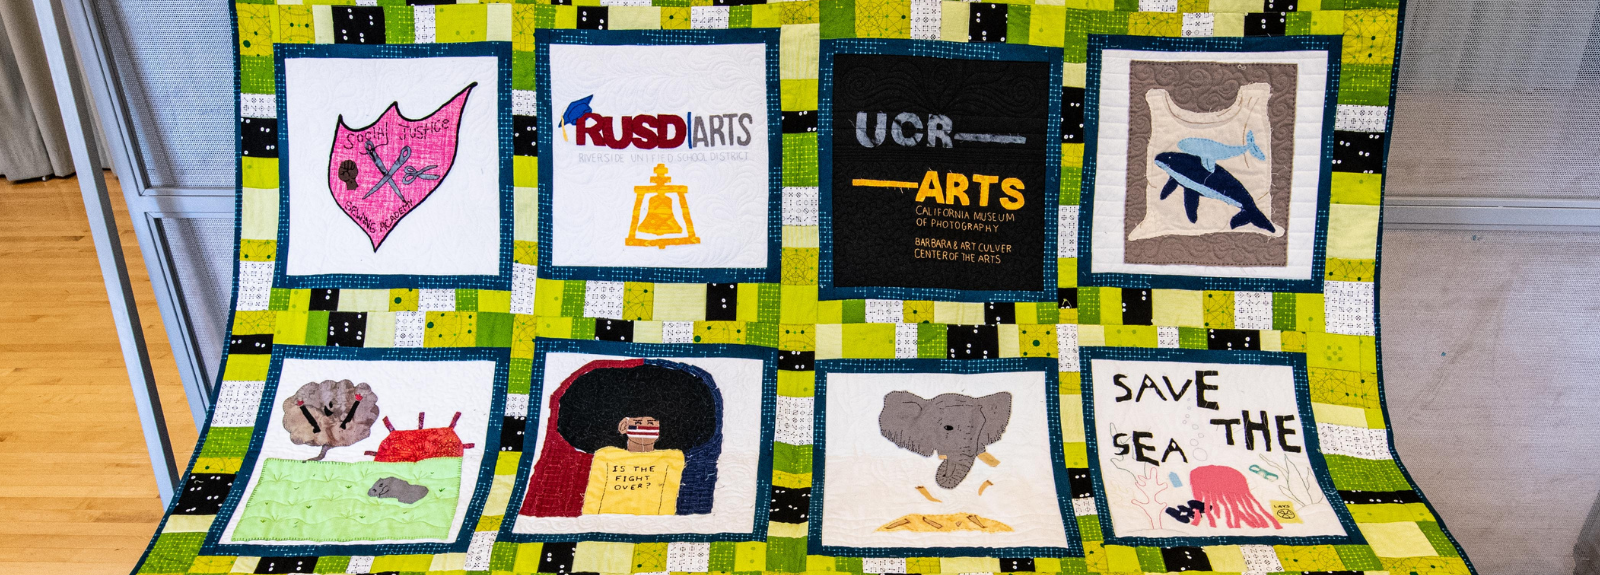 ucr arts school programs banner